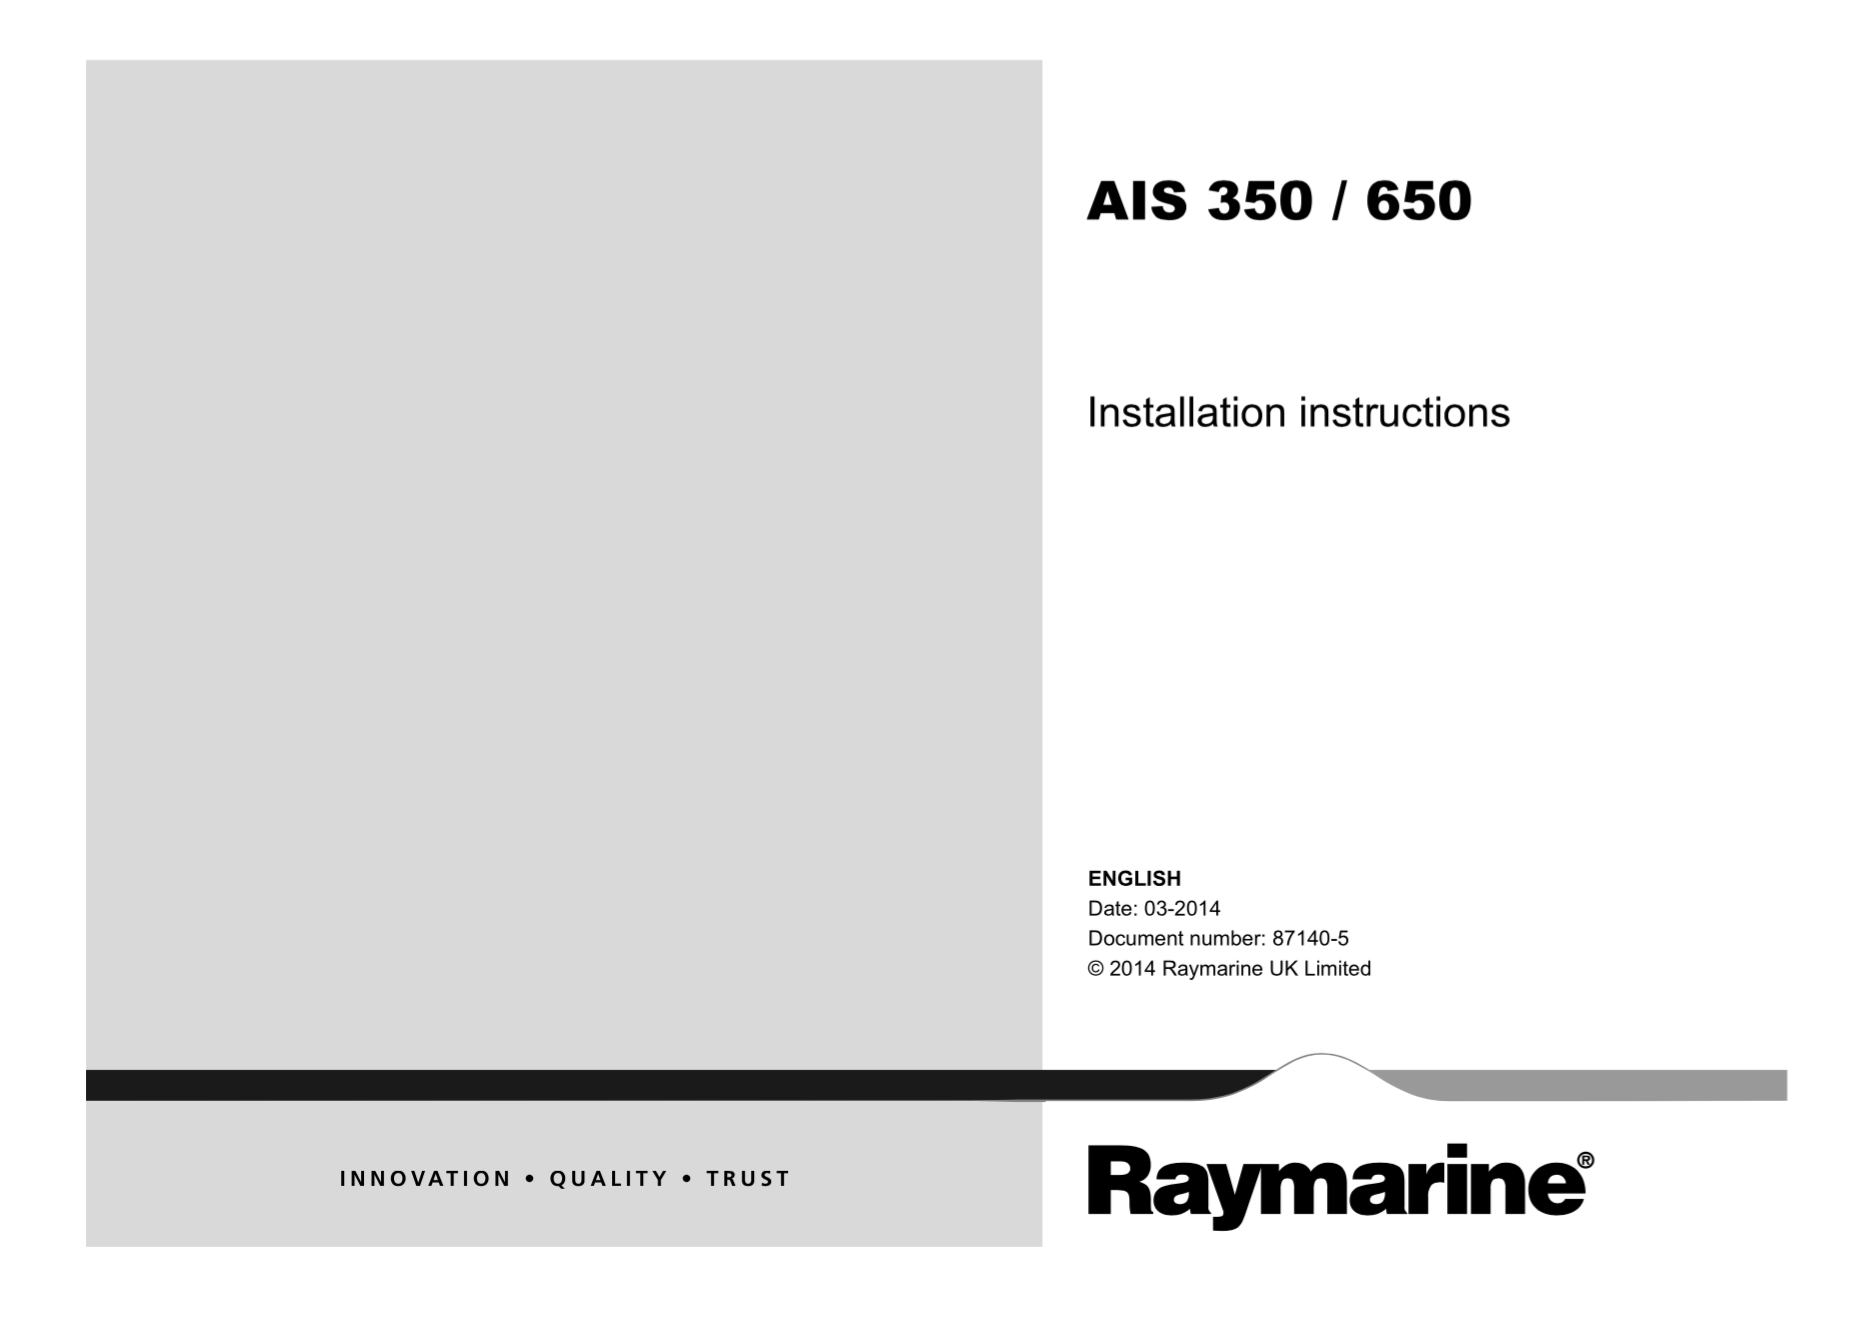 ais 350 650 installation instructions